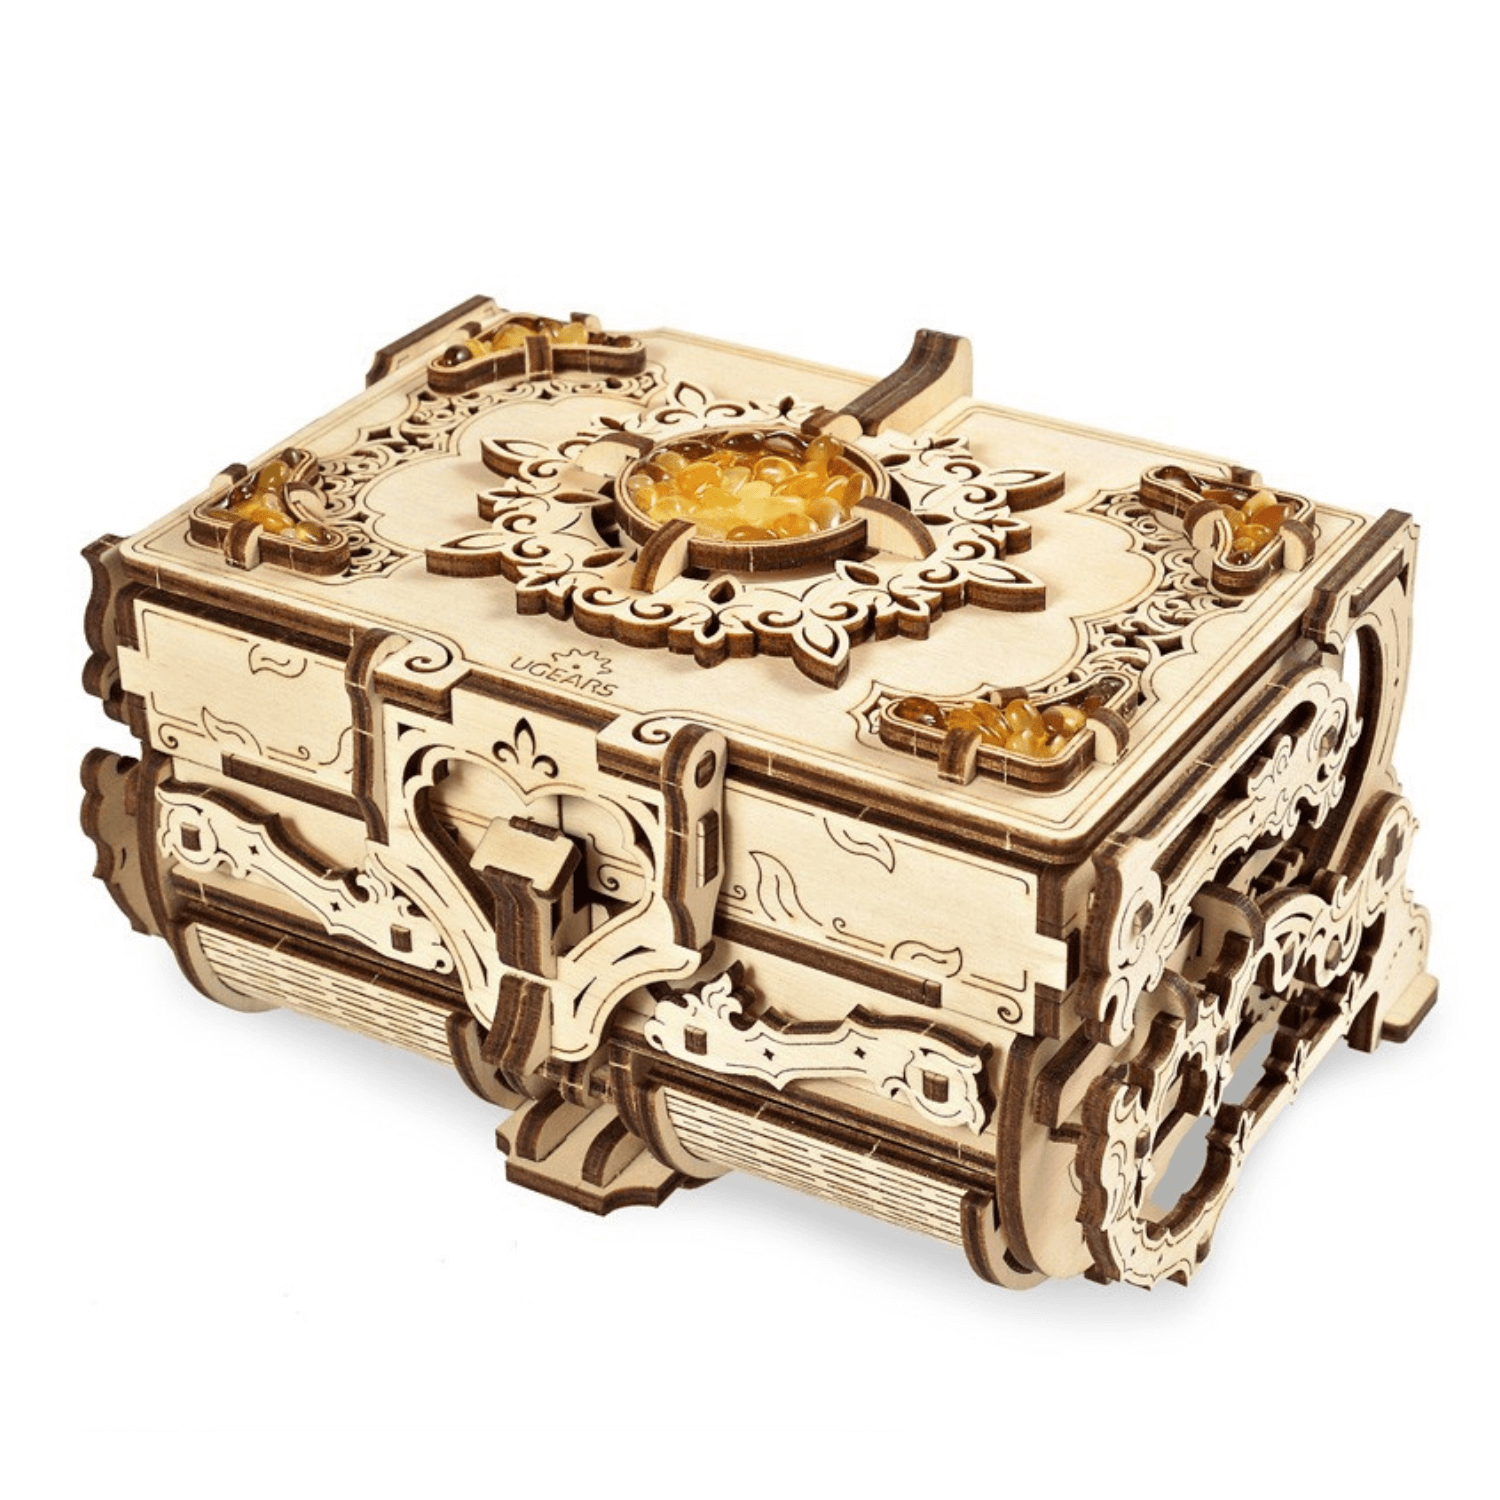 Amber casket